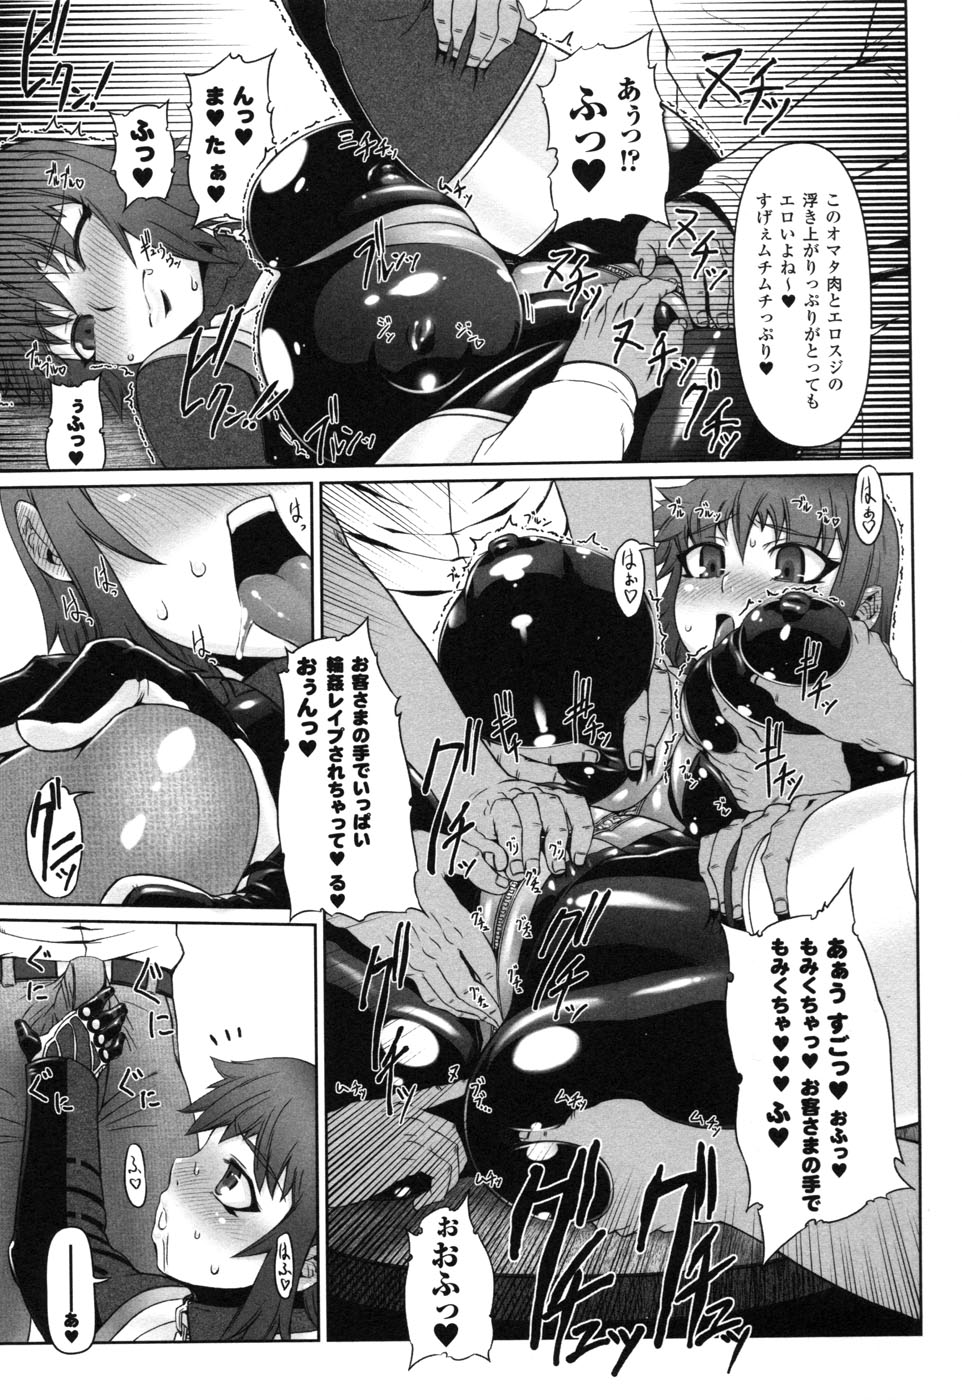 [Anthology] Rider Suit Heroine Anthology Comics 2 page 33 full